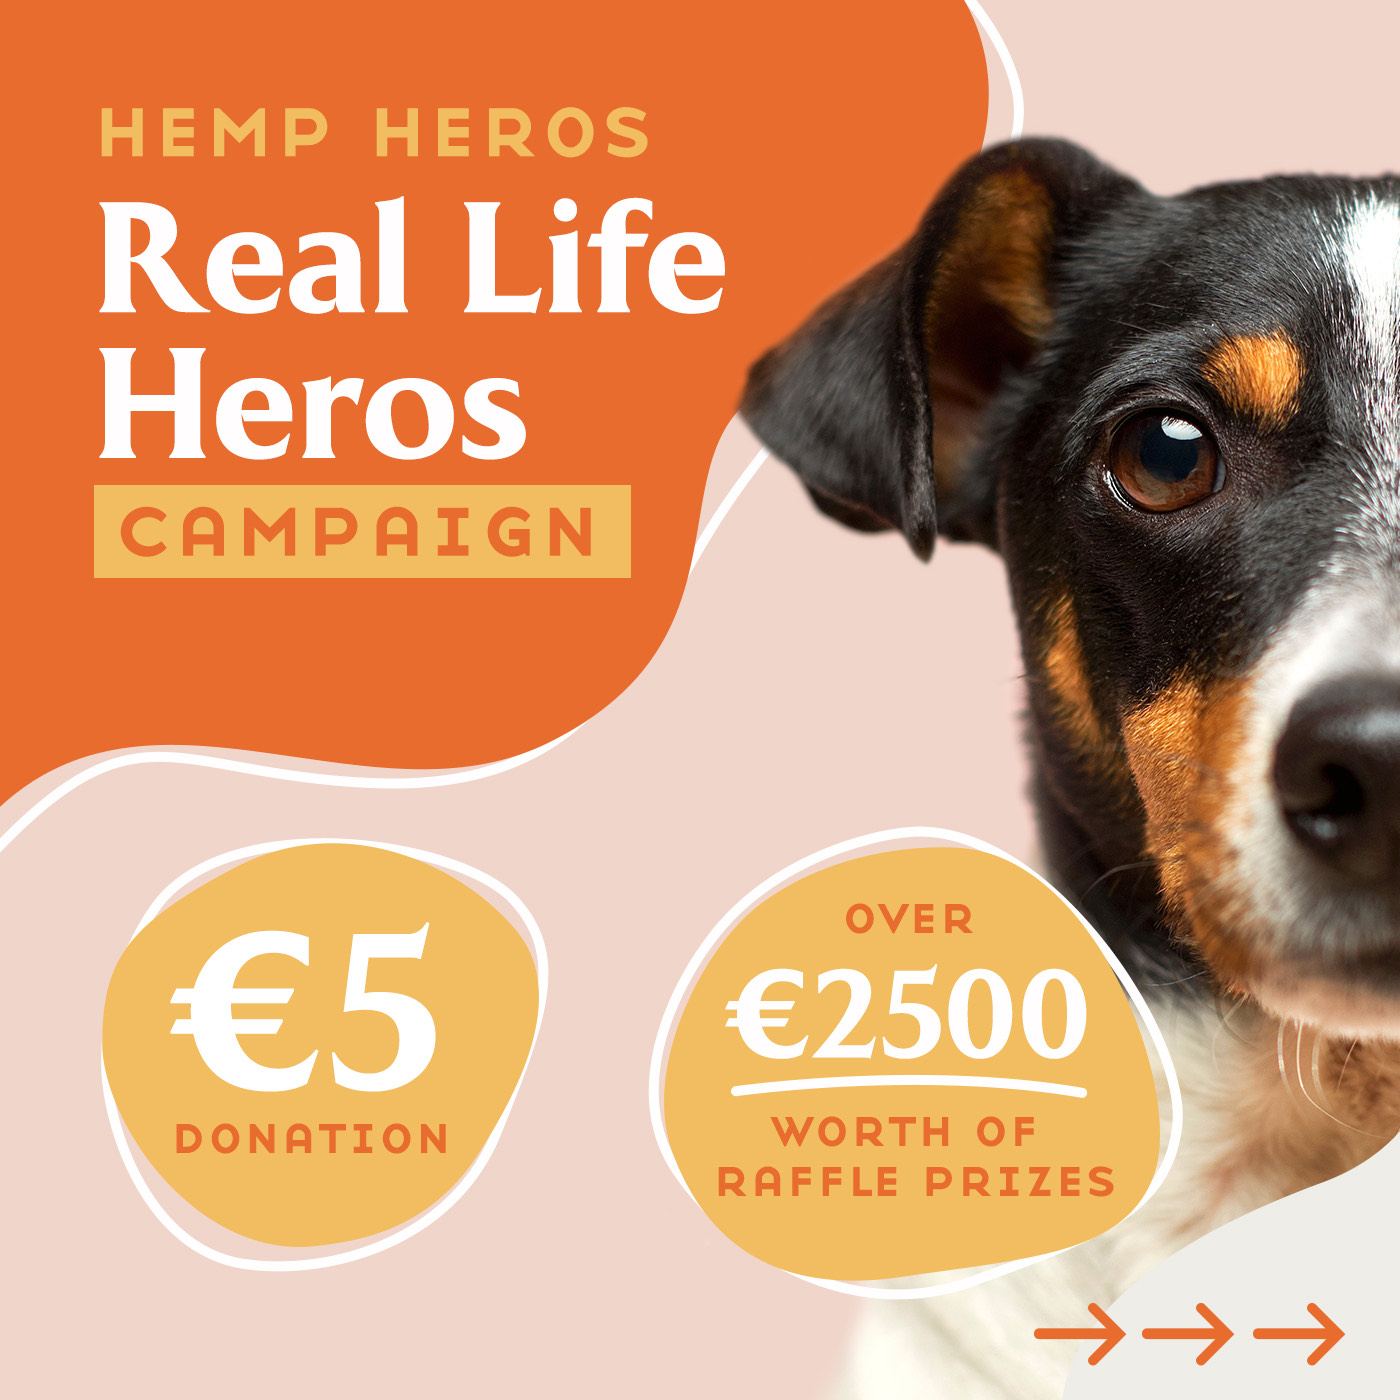 Hemp Heros Fundraiser for Animal Welfare Charities